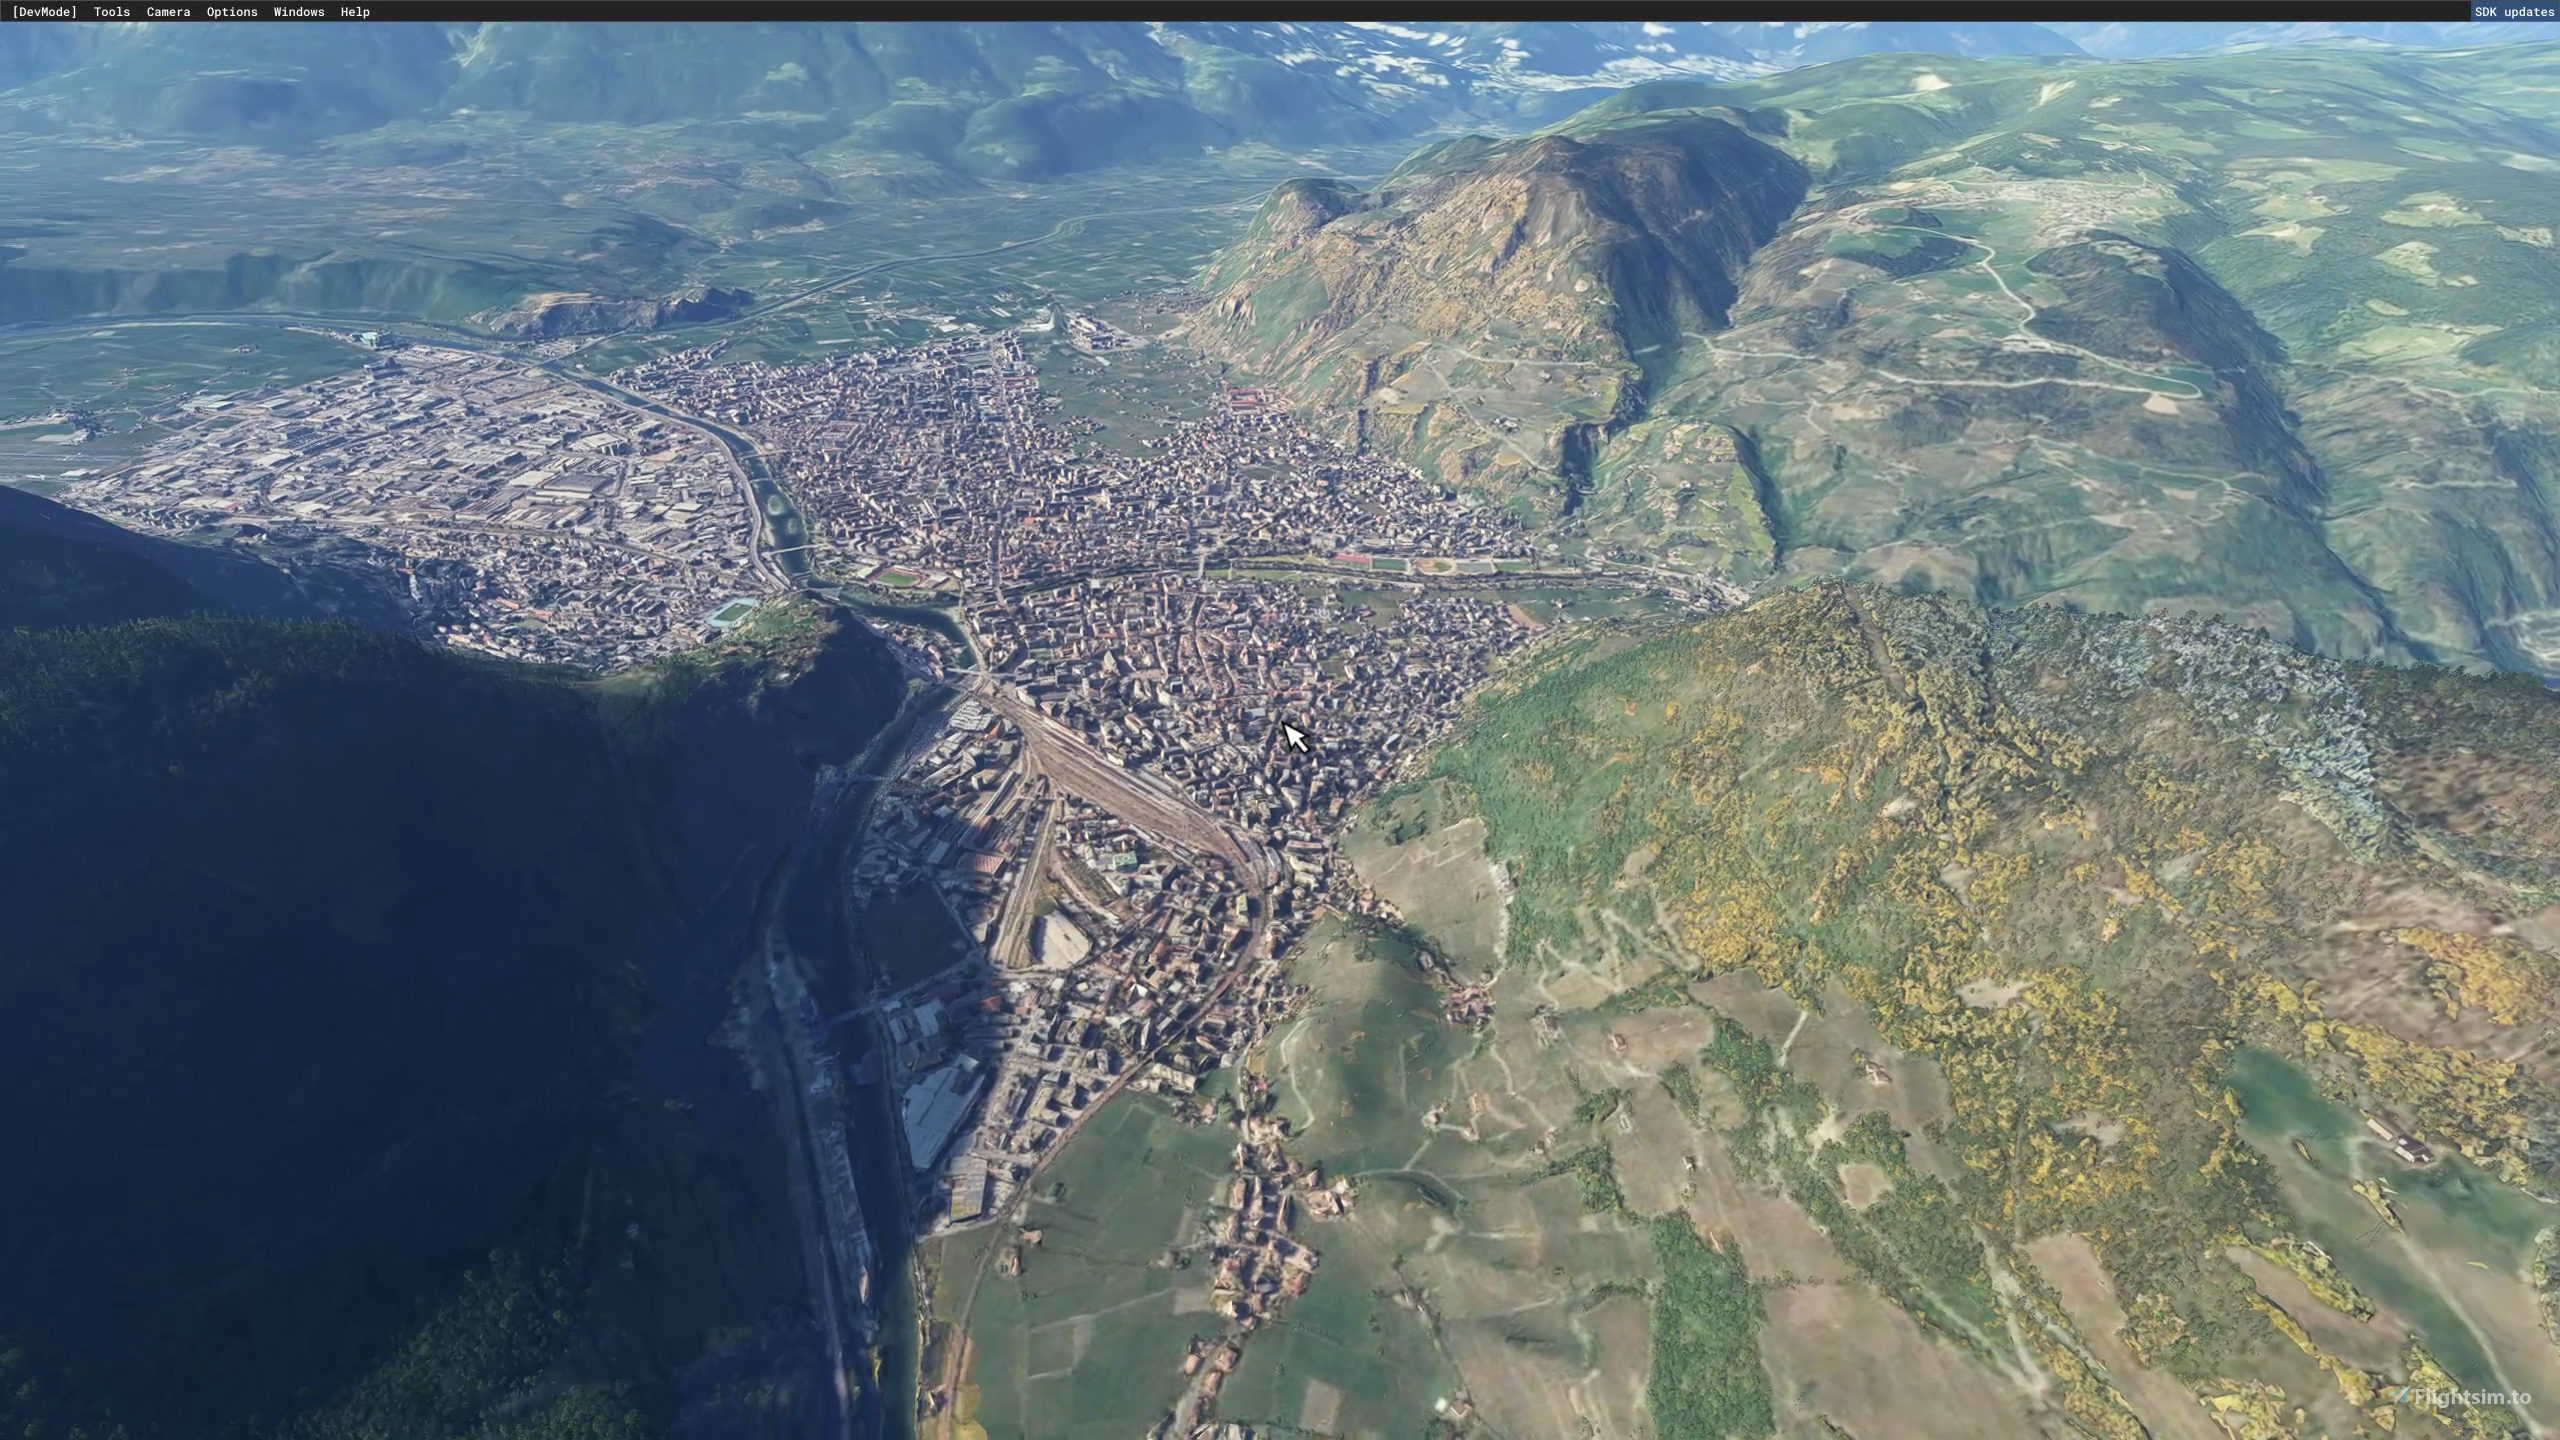 Bolzano (high- OP)